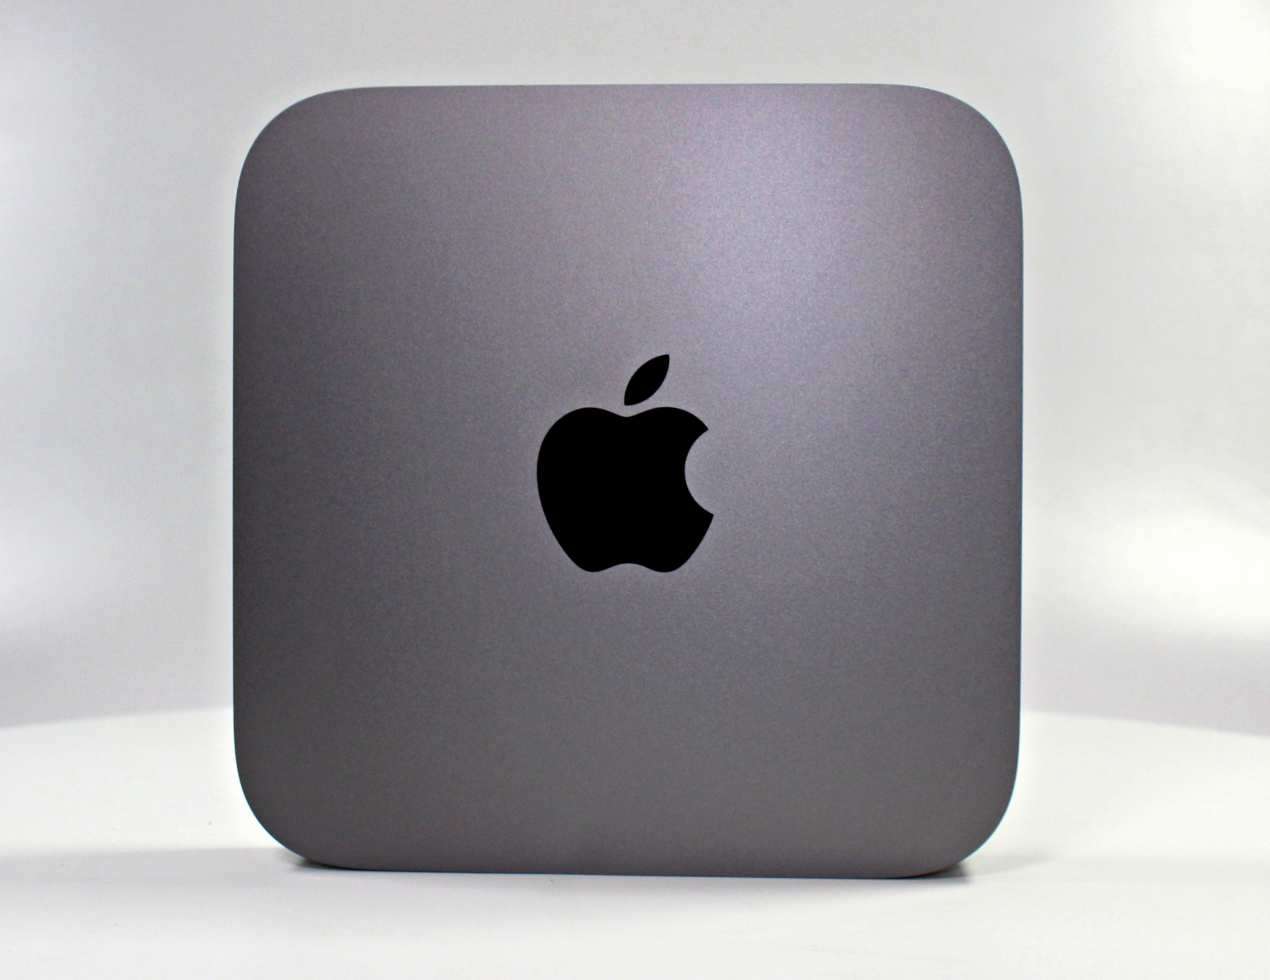 Apple Mac Mini 2018 (MRTT2LL/A, A1993) - 3.0GHz 6-core i5, Compact